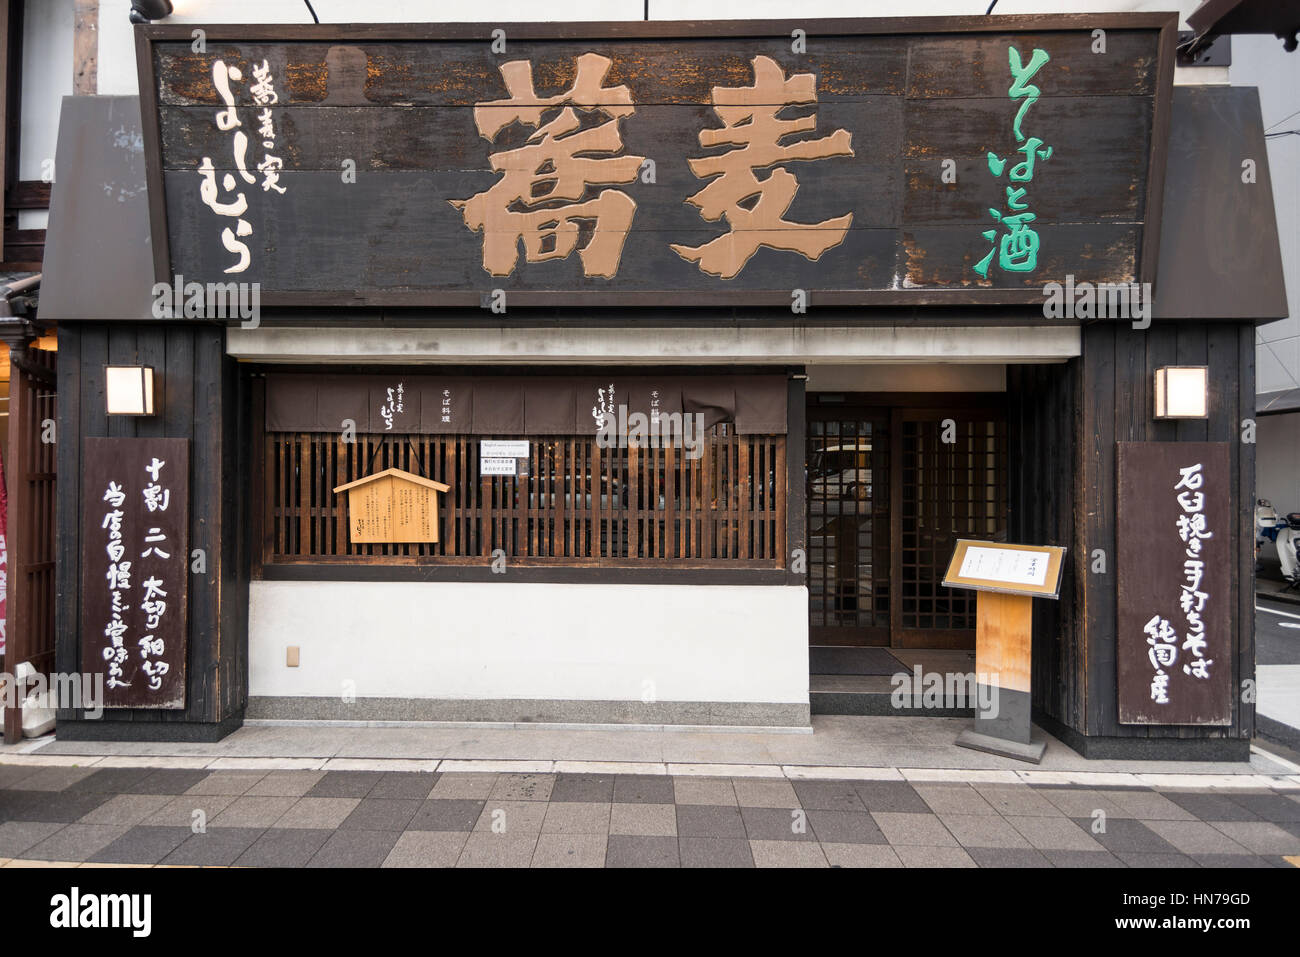 Facade of a Japanese restaurant, Kyoto, Japan Stock Photo